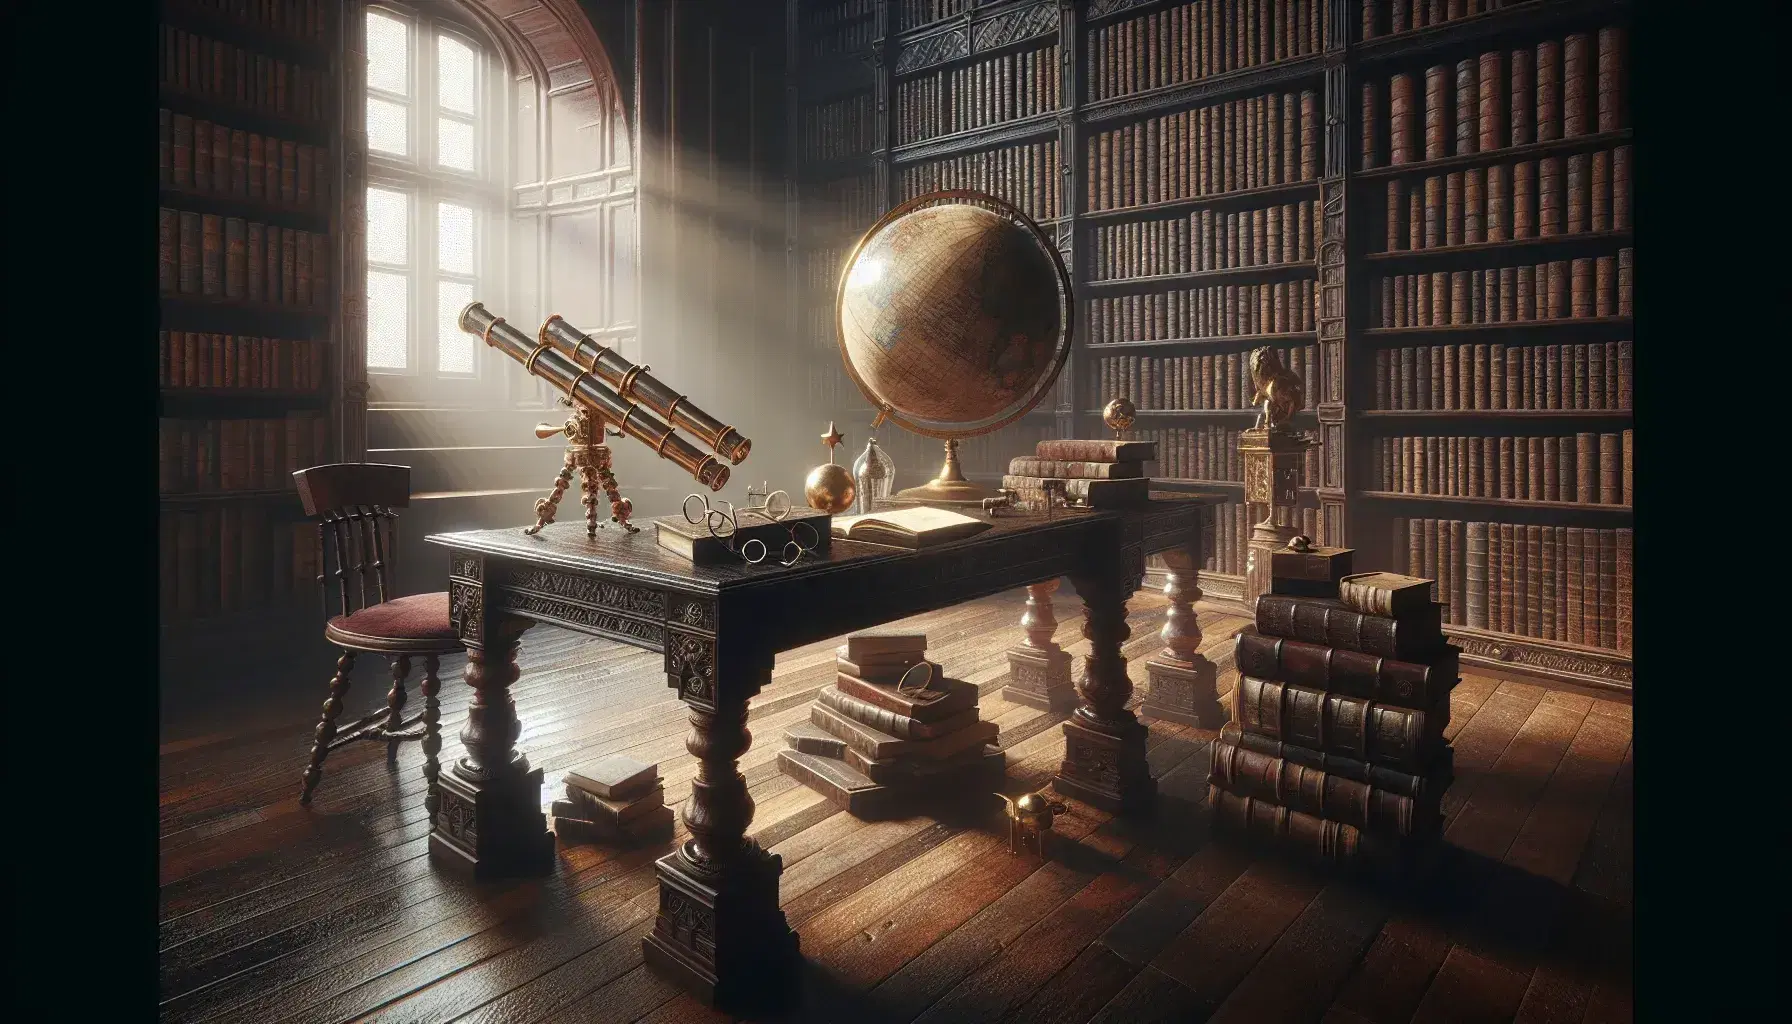 Biblioteca antigua con mesa de madera oscura, globo terráqueo, lentes dorados y telescopio de latón bajo la luz natural de una ventana, rodeados de estantes con libros encuadernados.